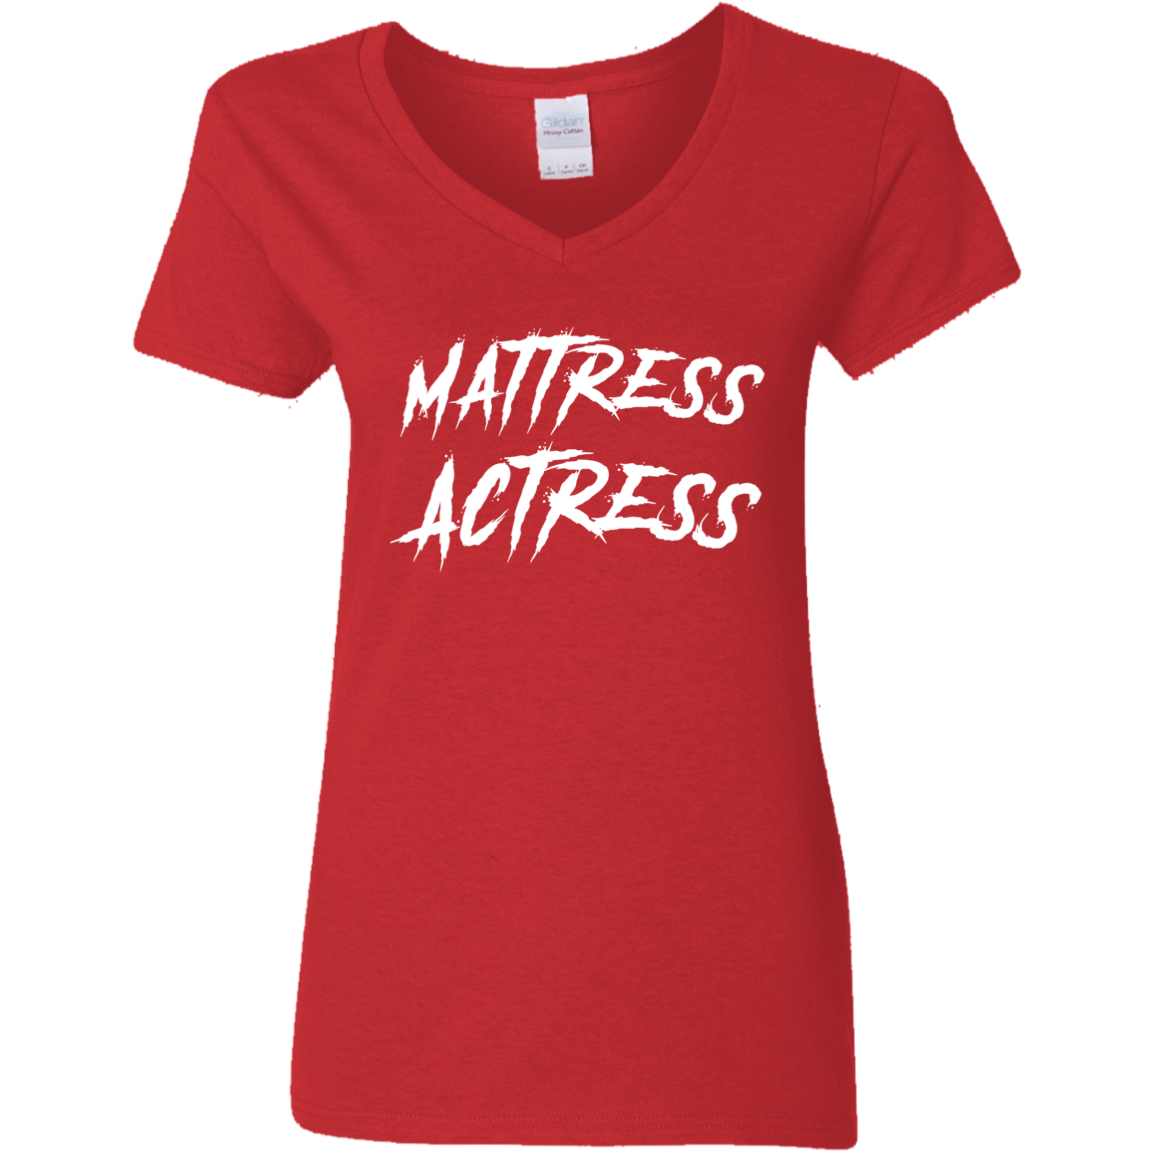 "Mattress Actress" Ladies' 5.3 oz. V-Neck T-Shirt